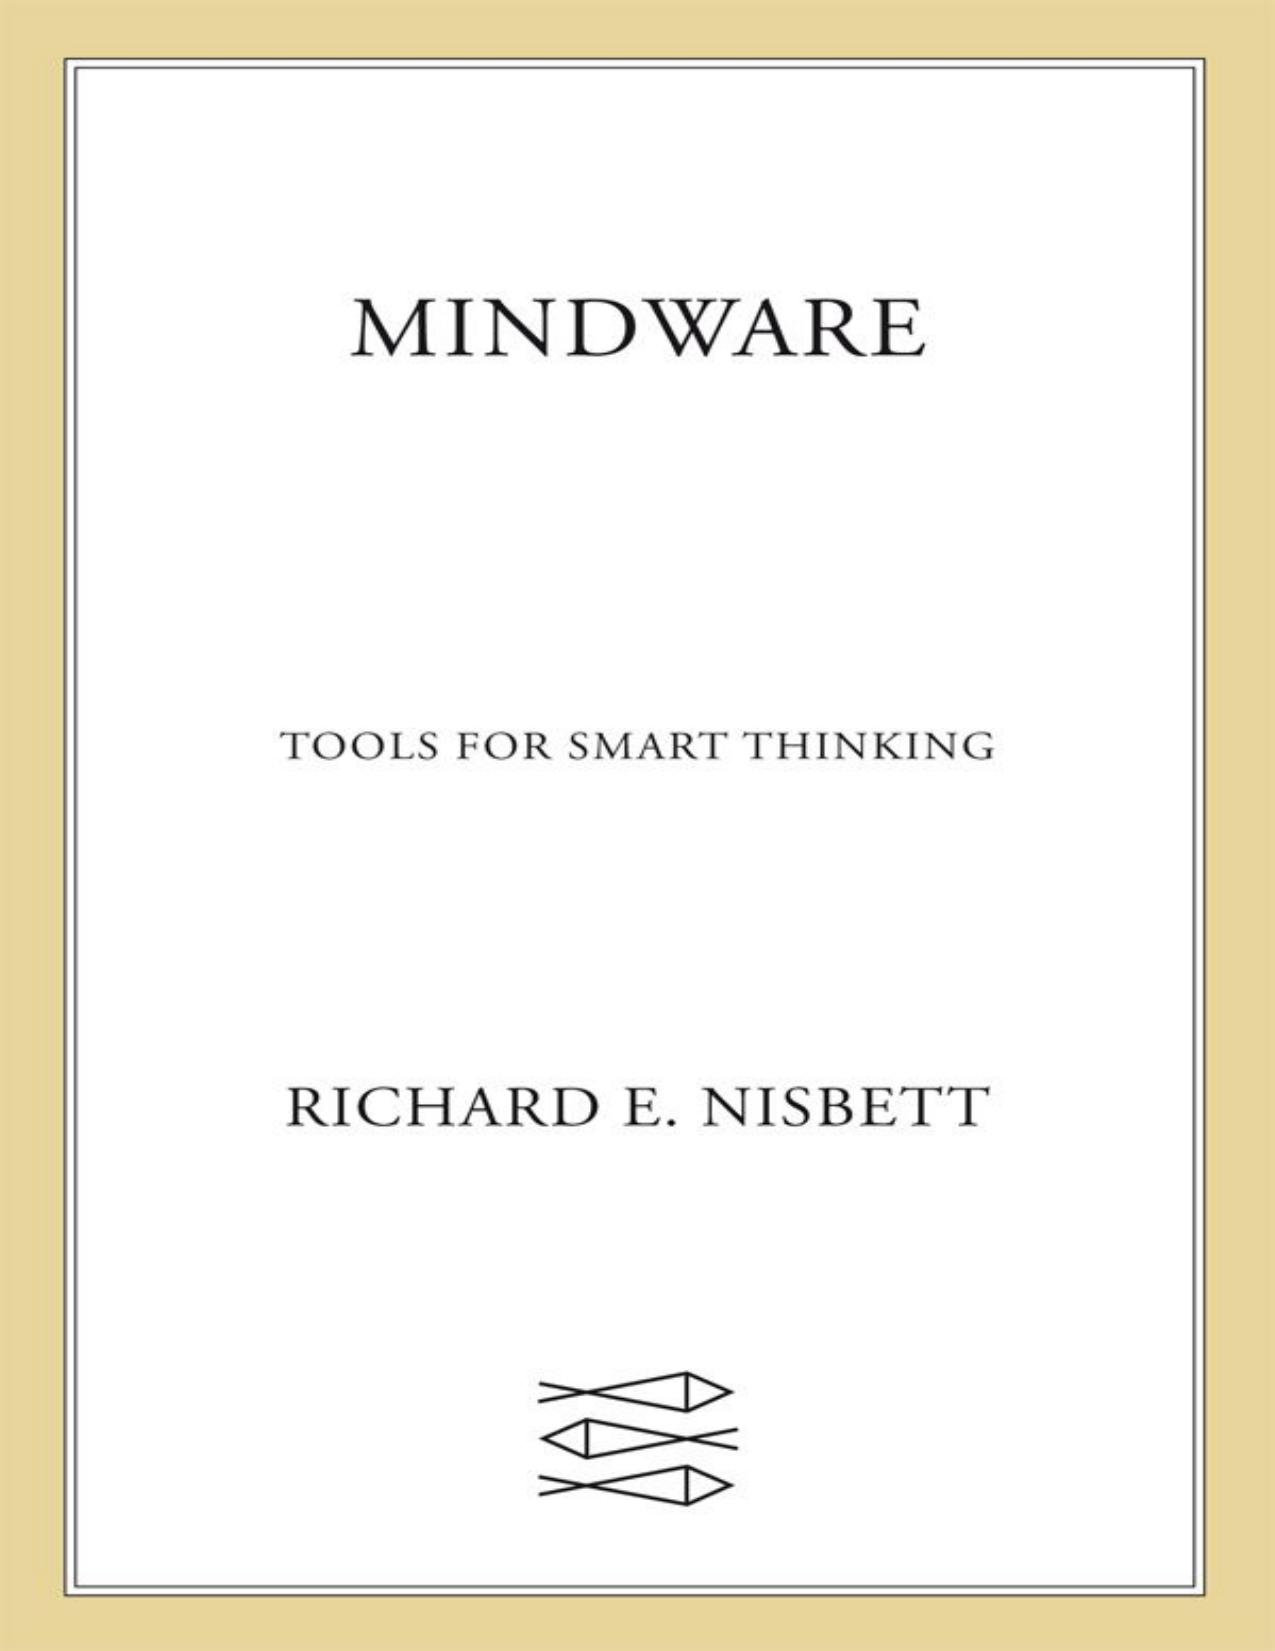 Mindware: Tools for Smart Thinking by Richard E. Nisbett